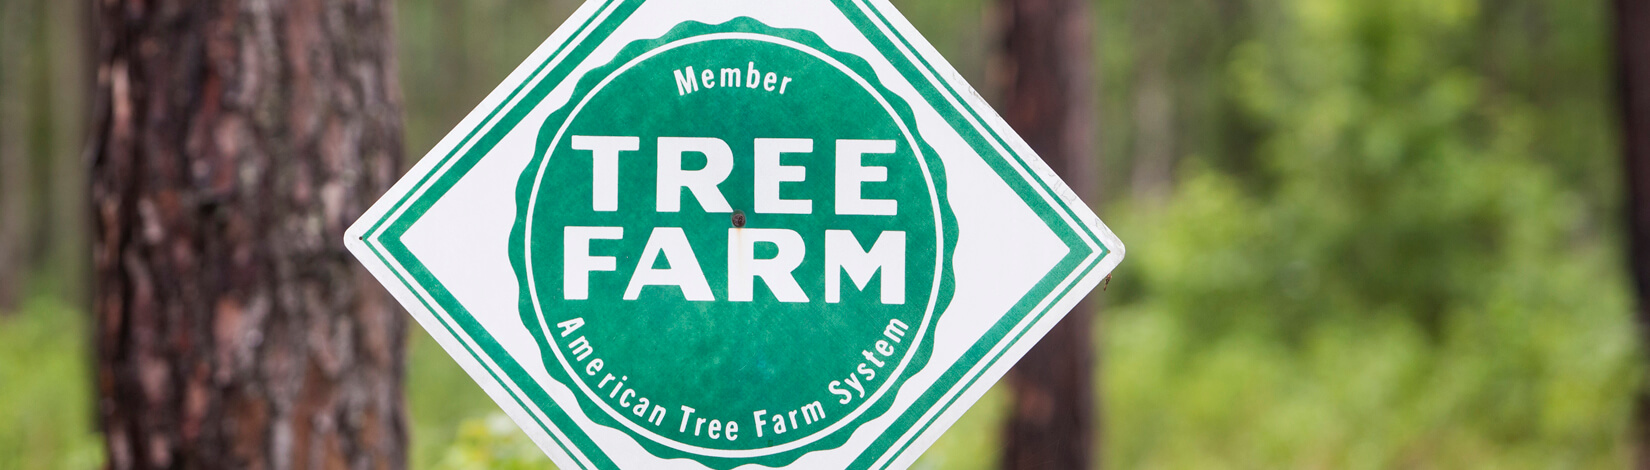 tree farm sign